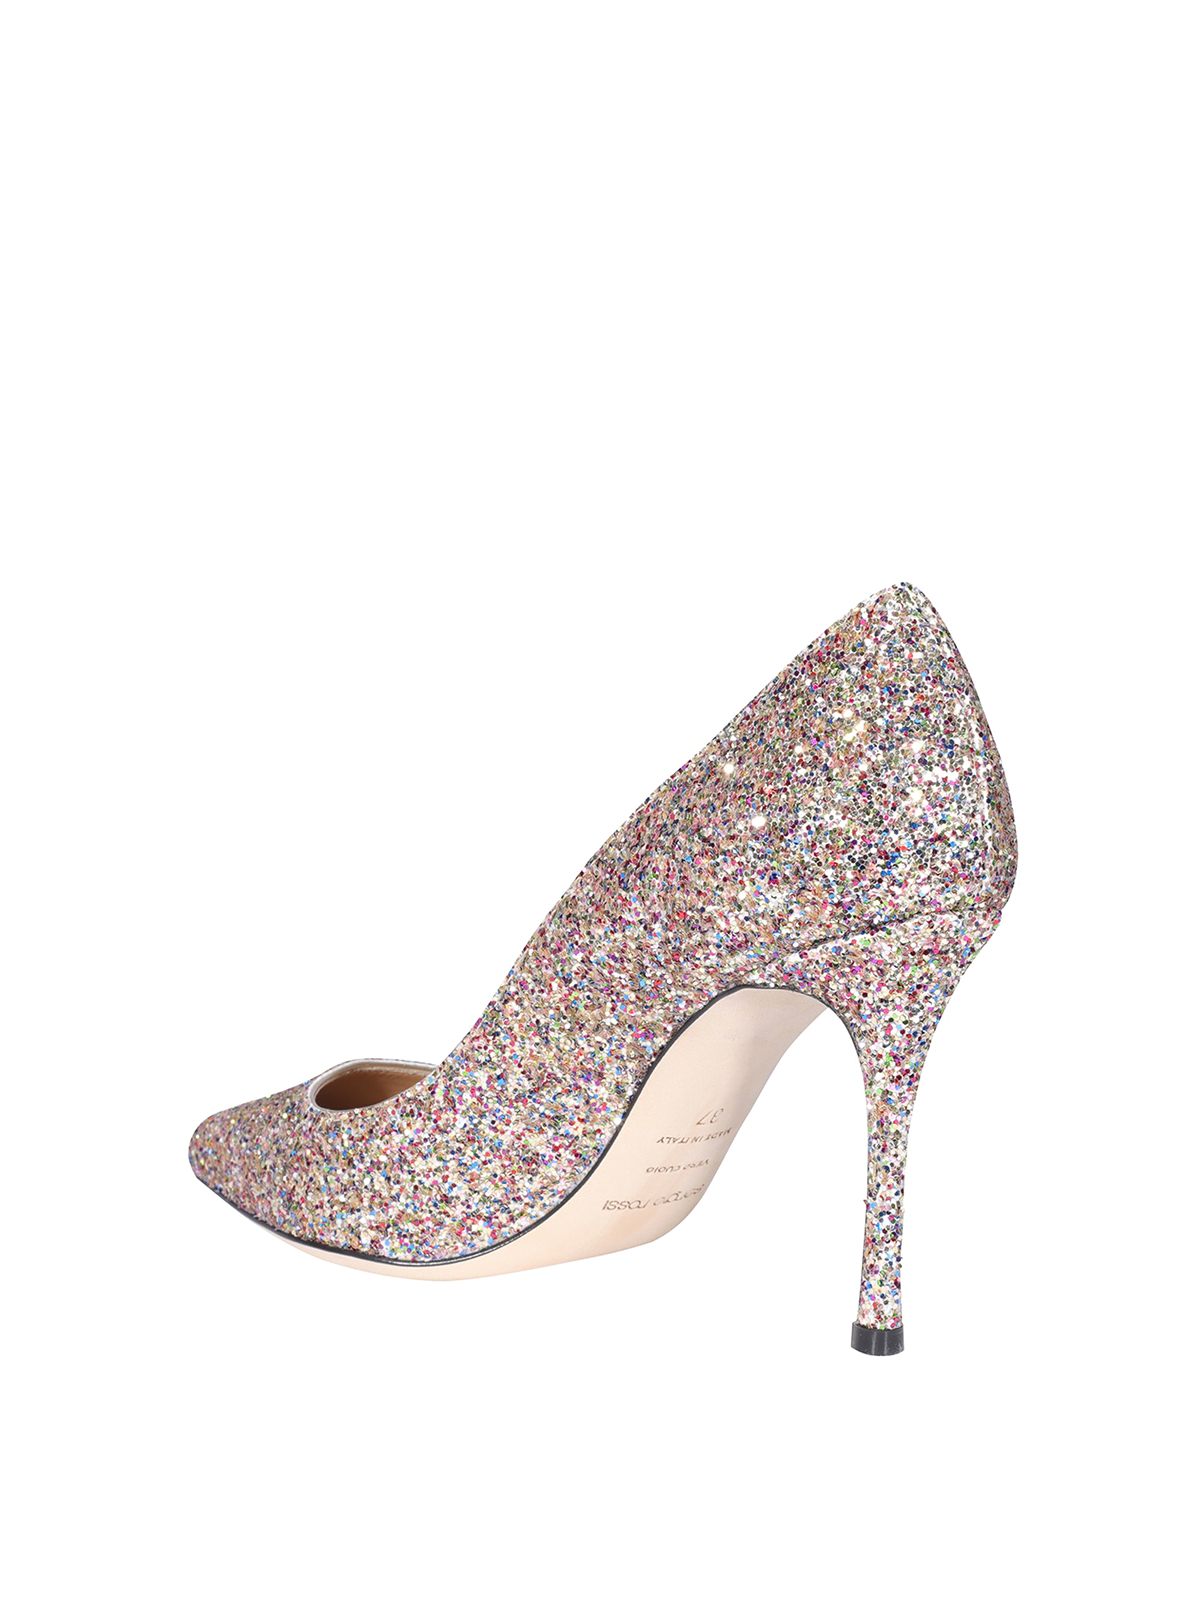 Court shoes Sergio Rossi - Godiva glittered pumps - A43843MTE3038774